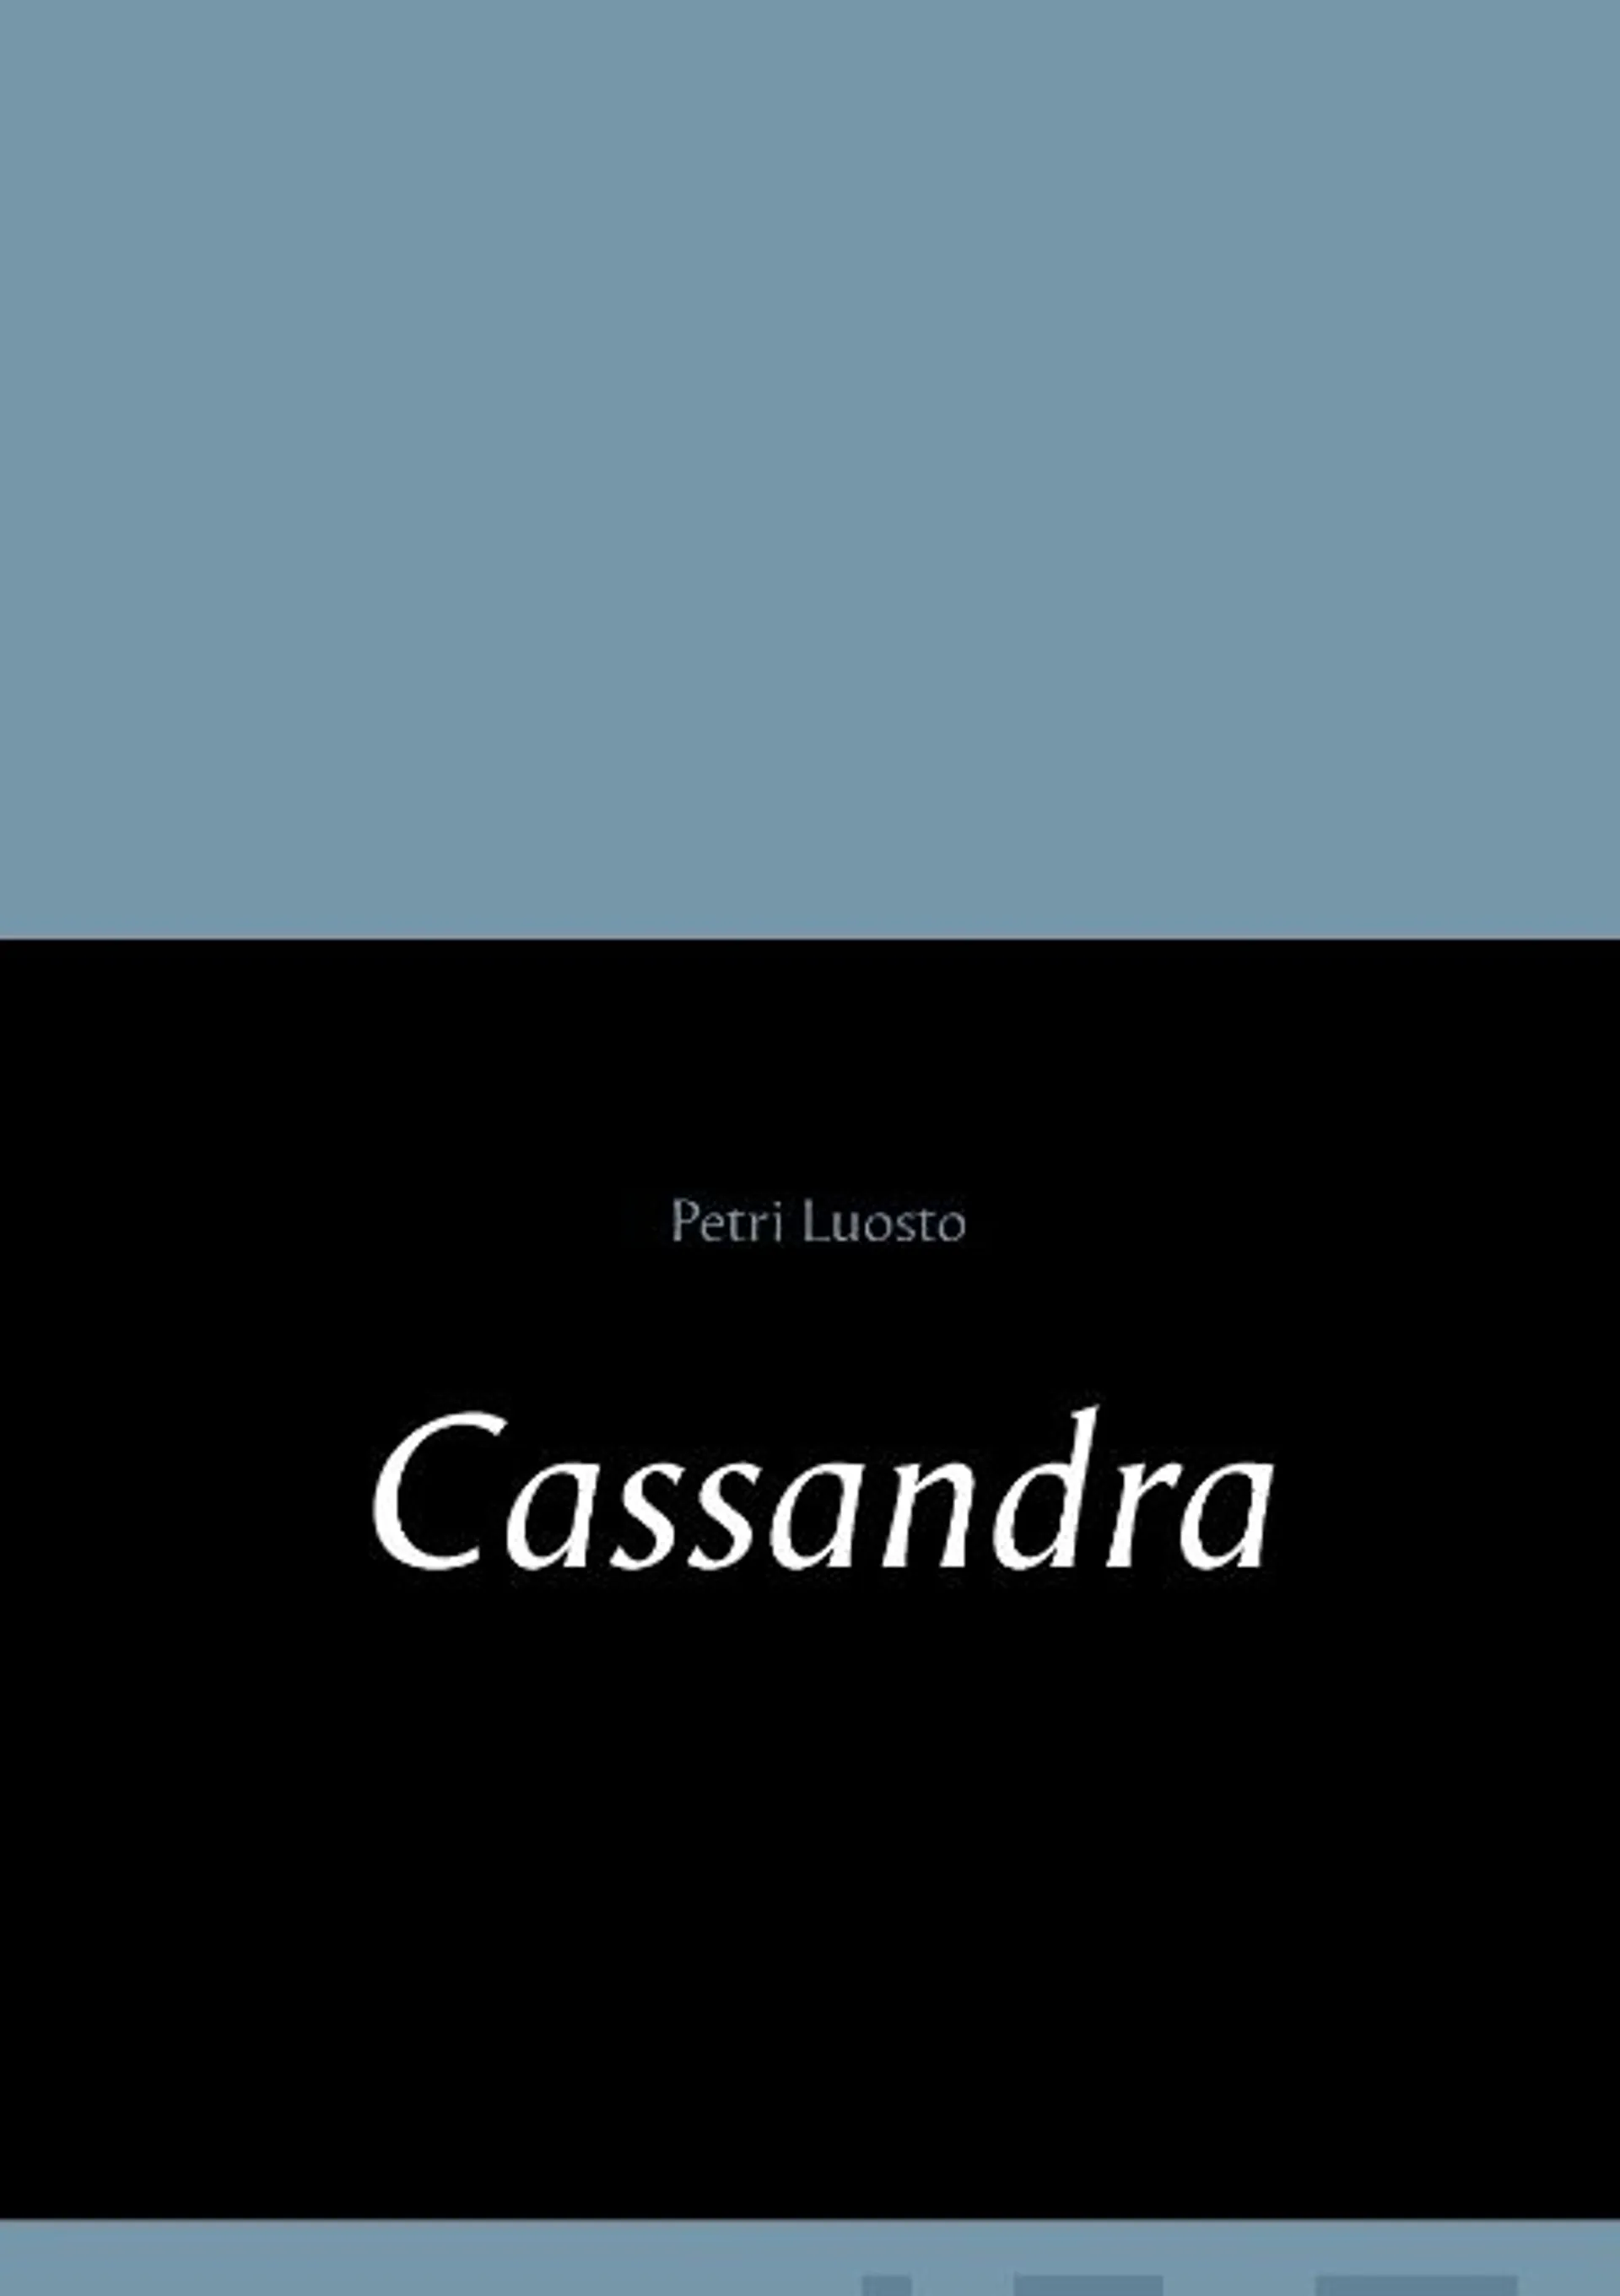 Luosto, Cassandra